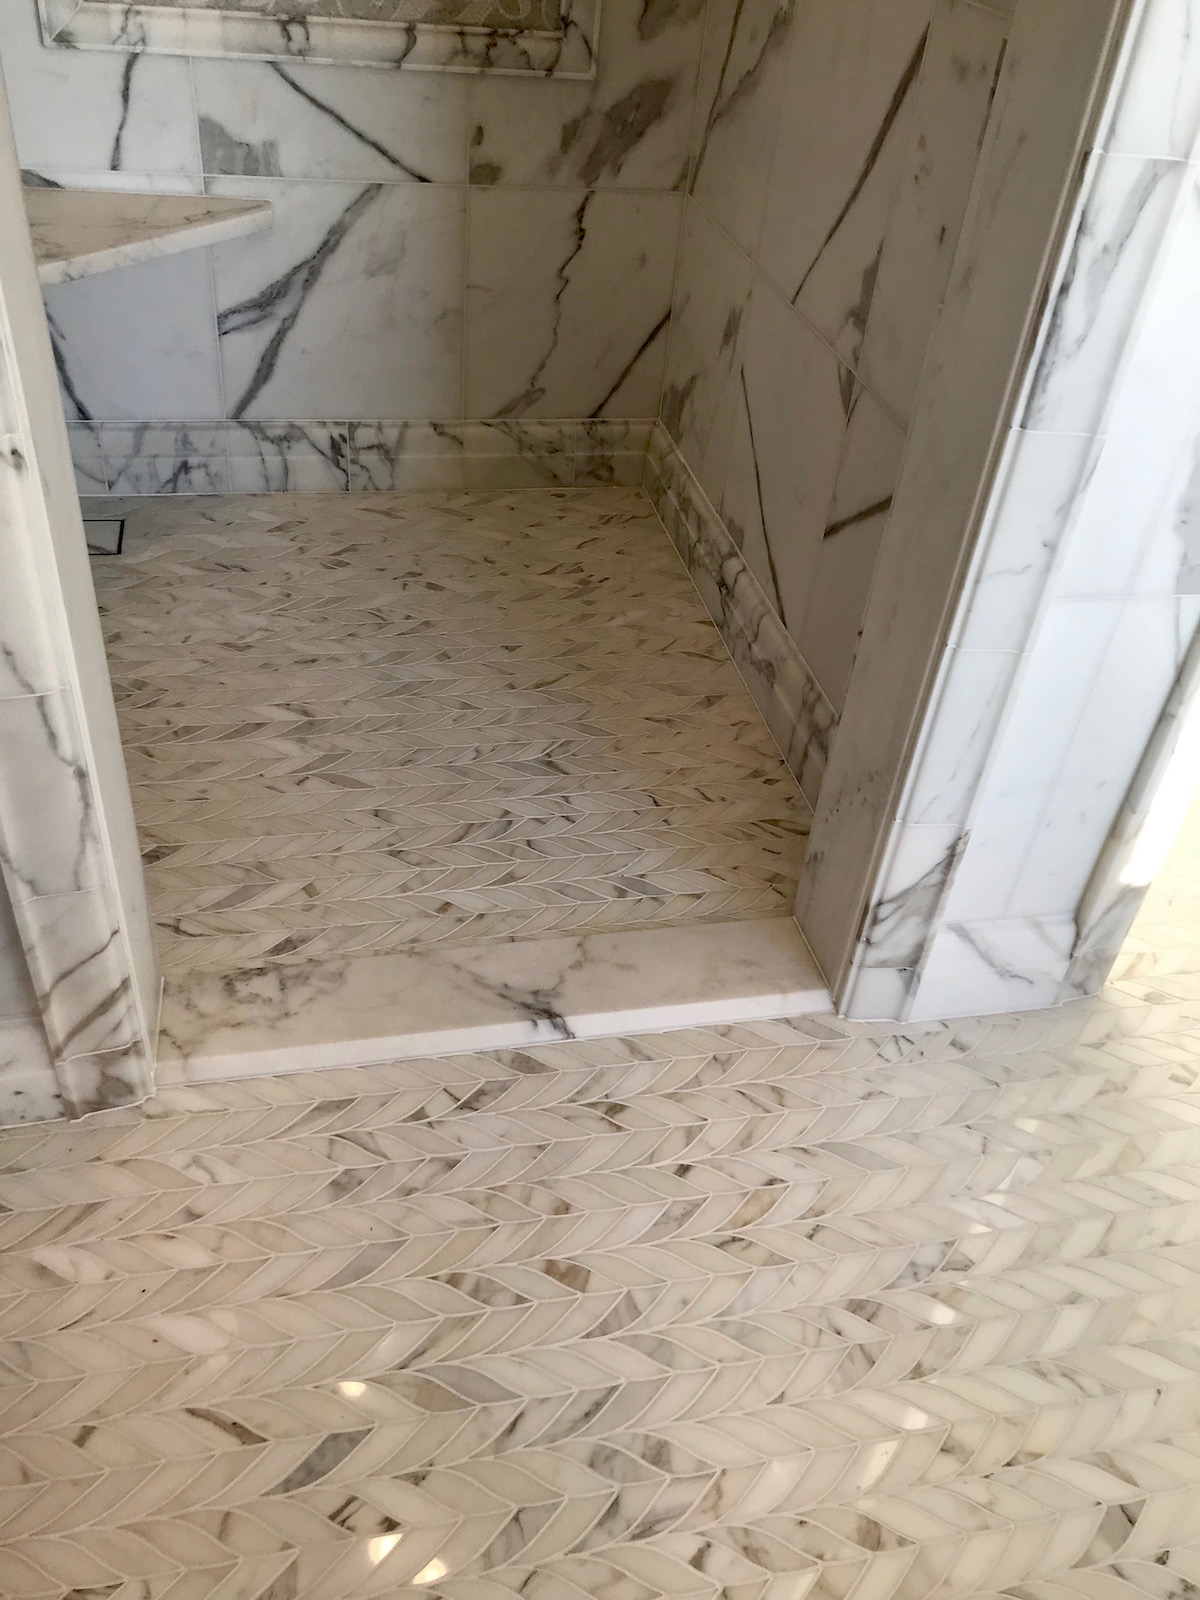 Marble mosiac bath and shower floor